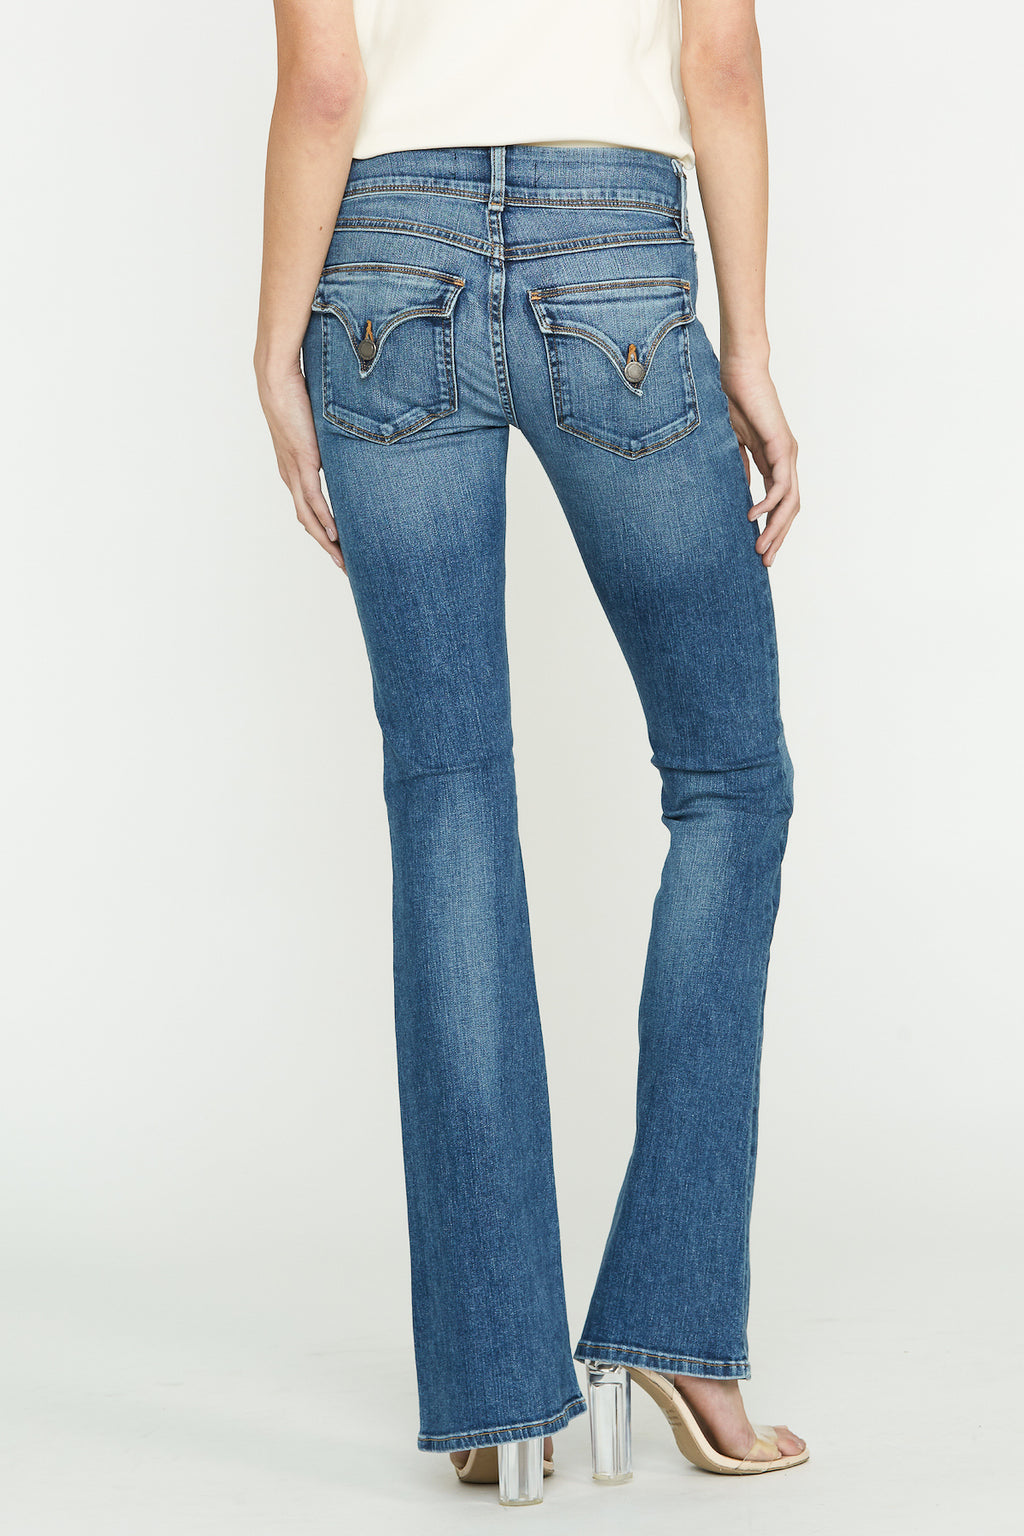 hudson bootcut jeans women's